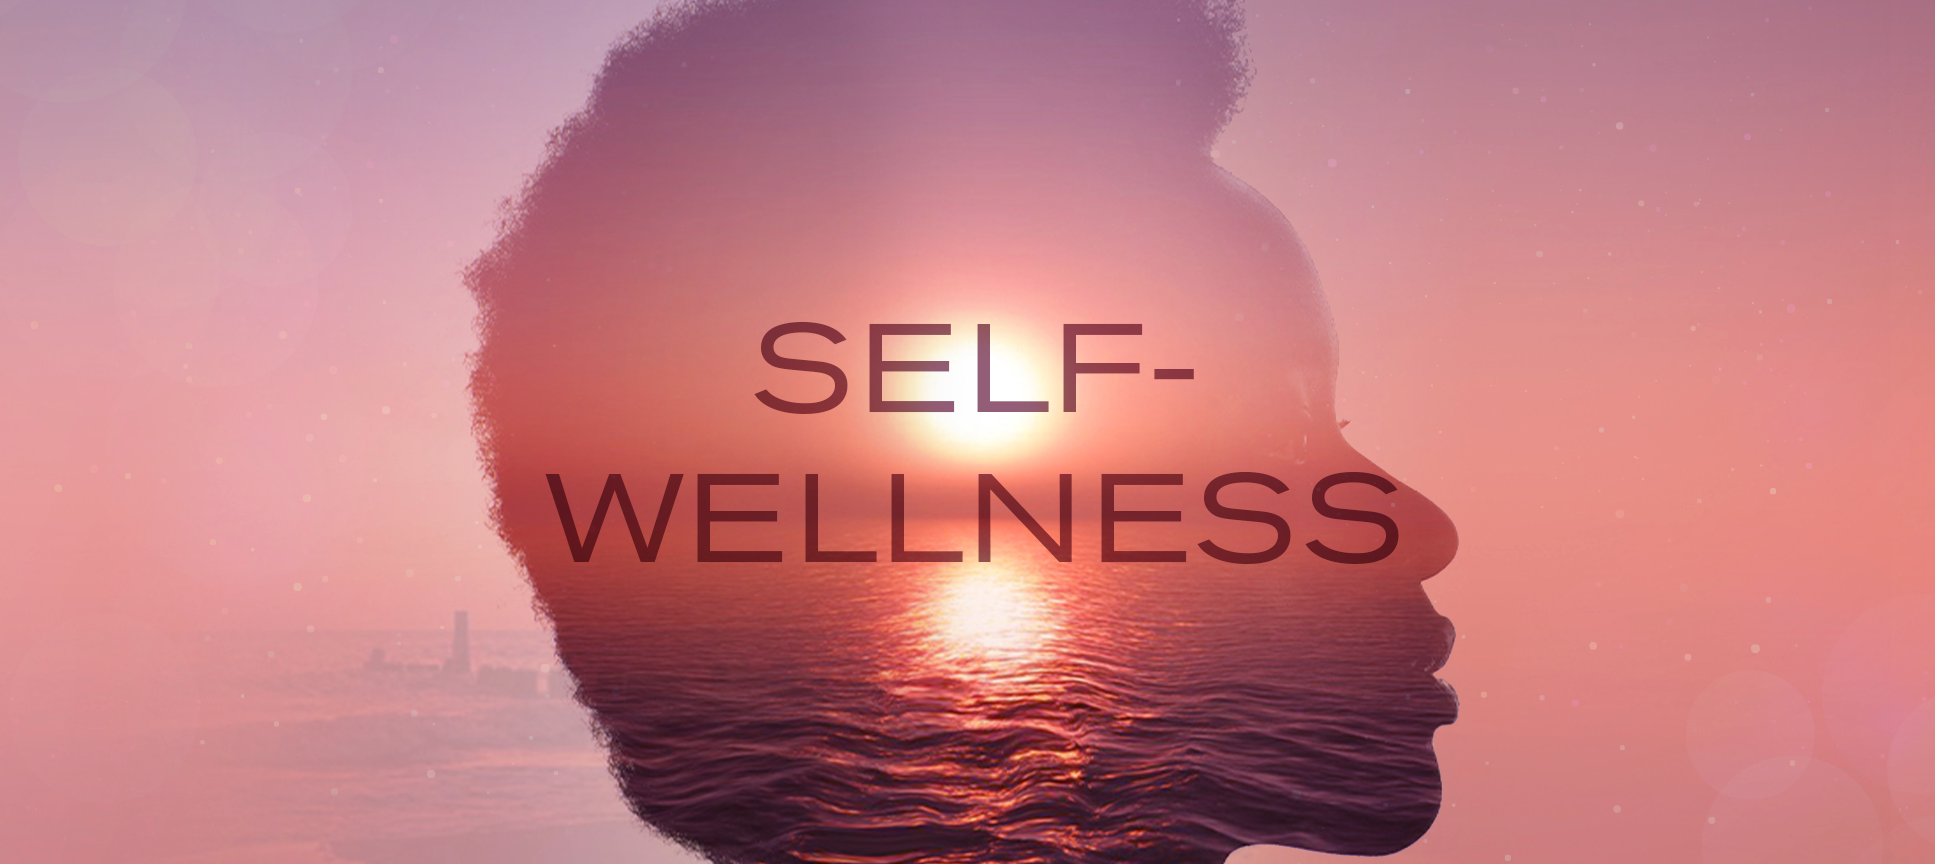 Self-Wellness: The Concept